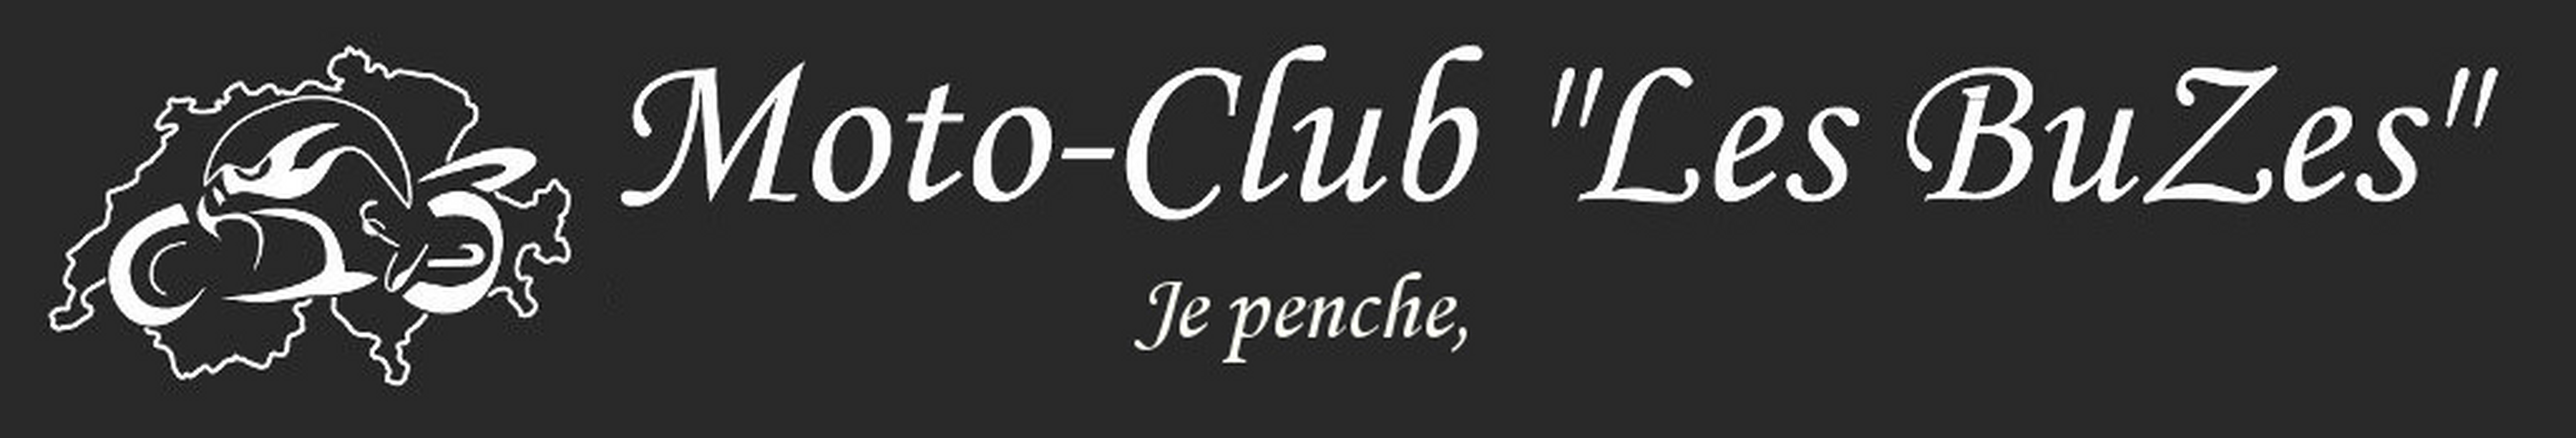 Logo_Moto-Club_Les-BuZes_long_banniere_new_site_3.jpg